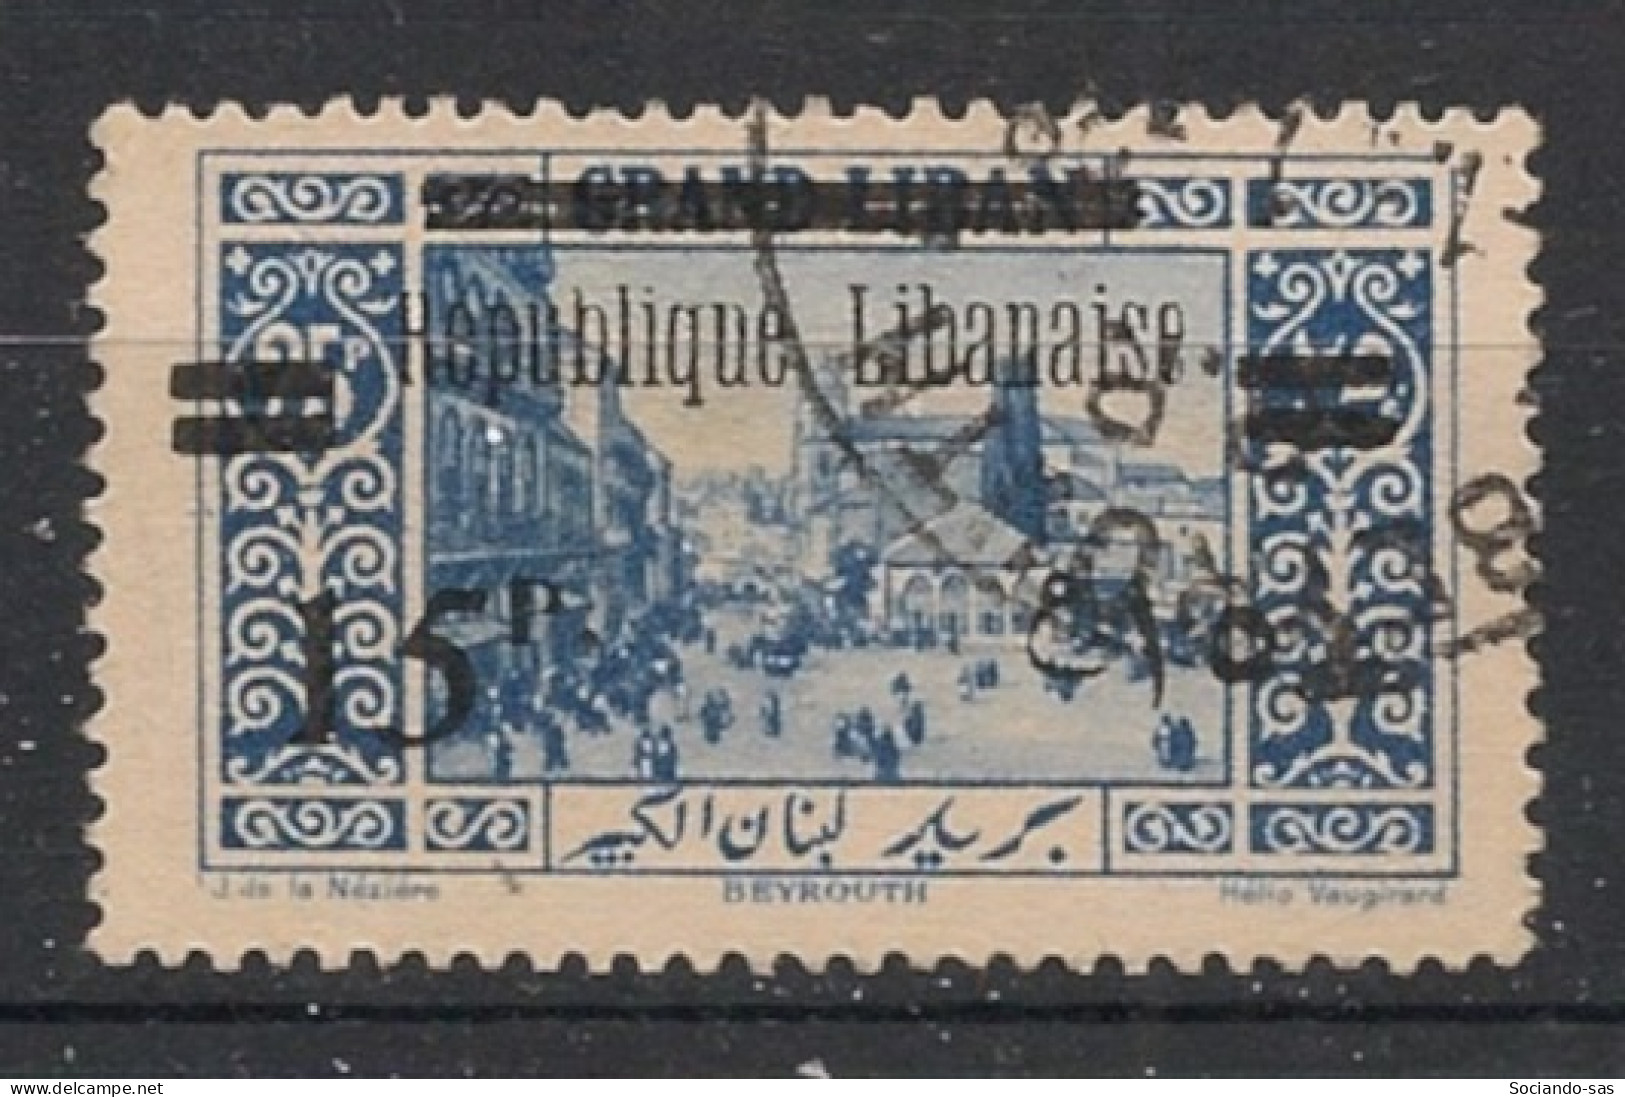 GRAND LIBAN - 1927 - N°YT. 95 - Beyrouth 15pi Sur 25pi Bleu - Oblitéré / Used - Used Stamps